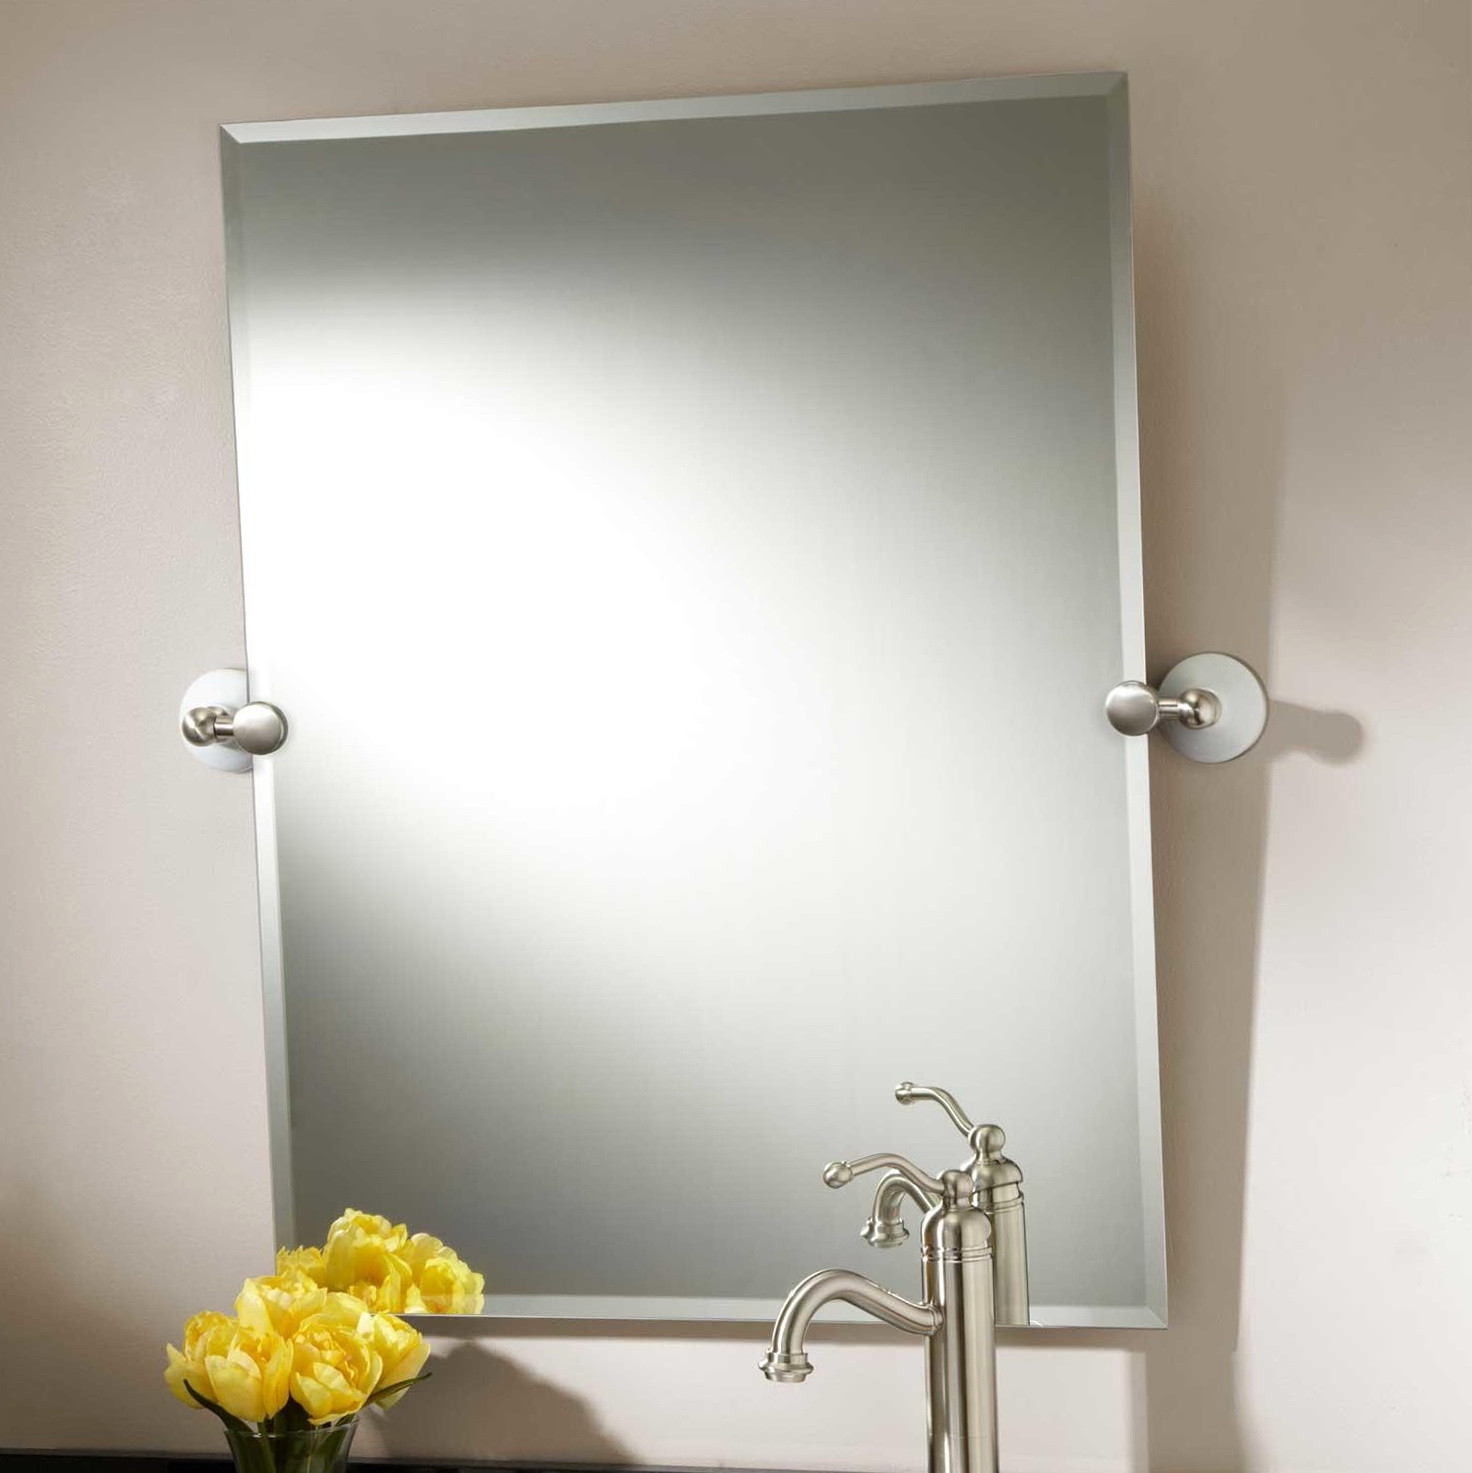 Polished Nickel Bathroom Mirror
 Brushed Nickel Framed Bathroom Mirror